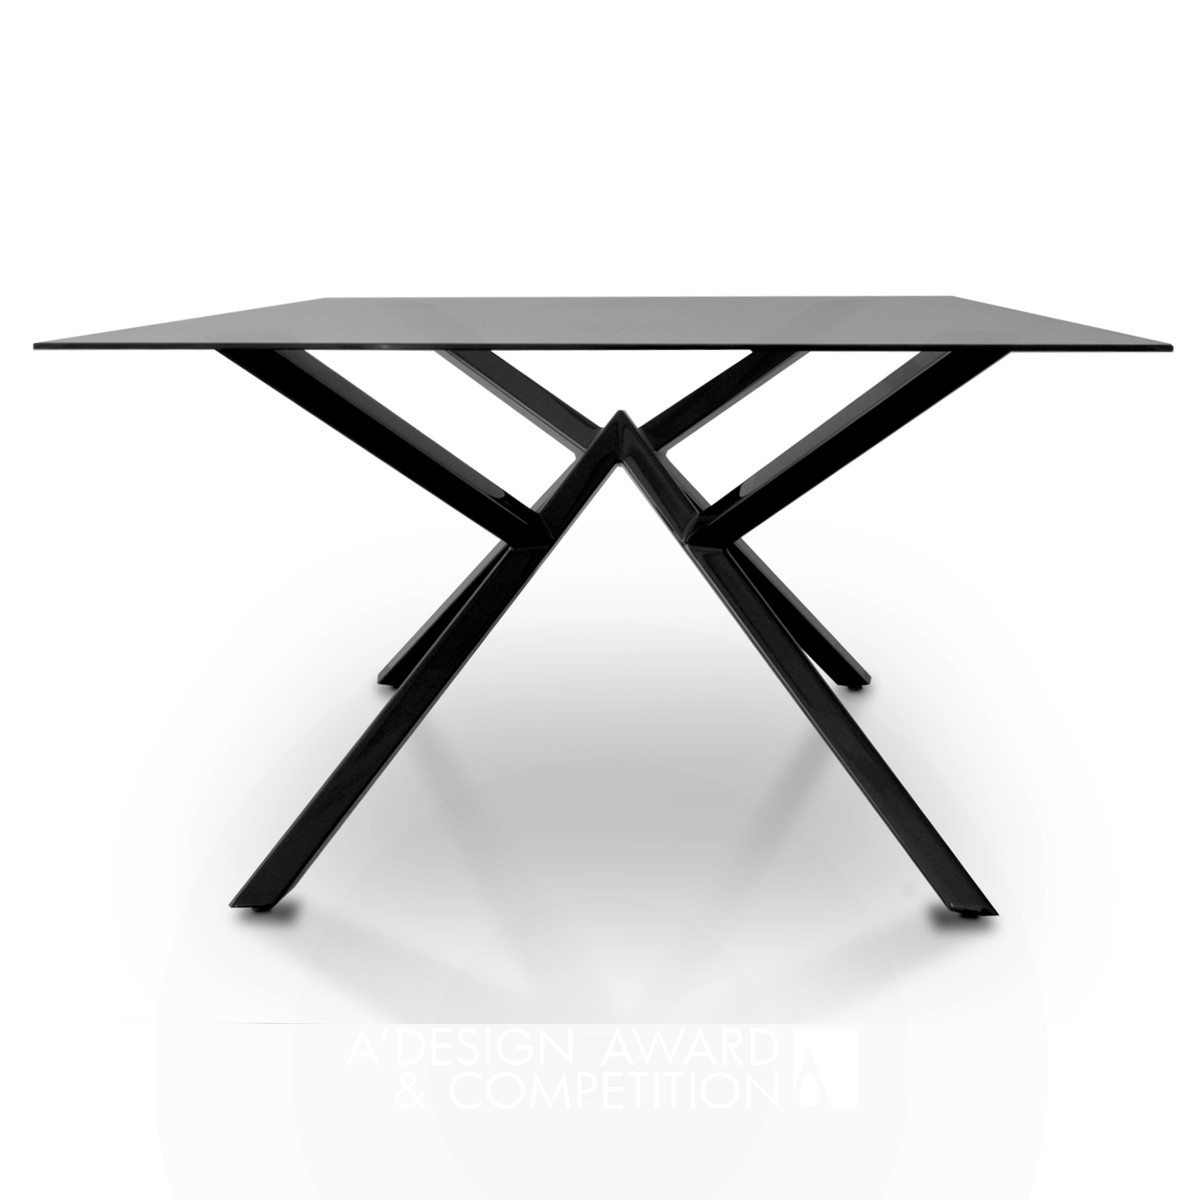 Interstellar table Entrance Table by Fabrizio Constanza Bronze Furniture Design Award Winner 2018 